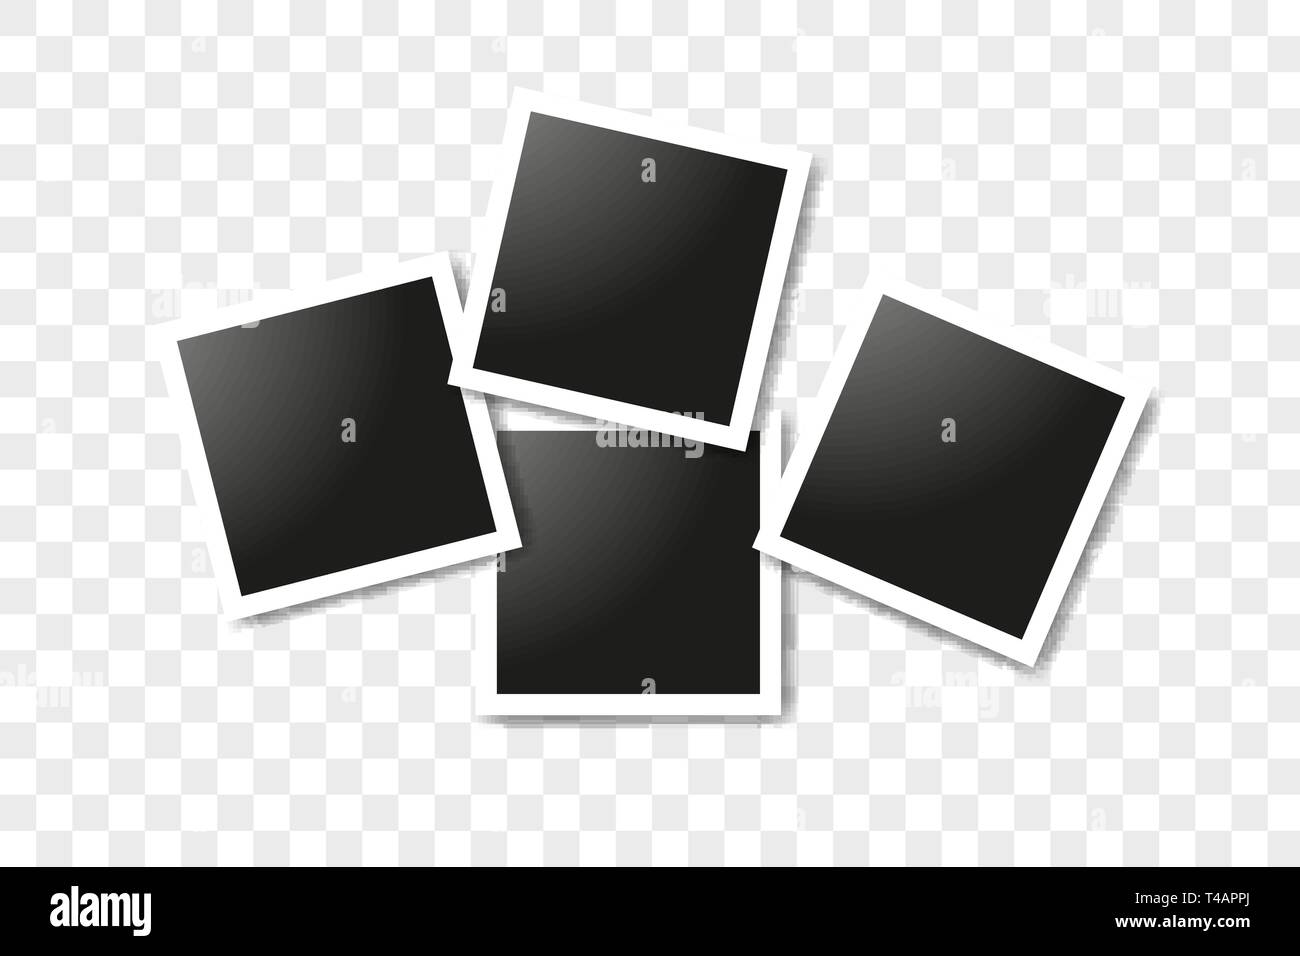 Download Set Of Realistic Square Frames Vector Photo Frame Mockup Design Vector Frames Photo Collage On Transparent Background Vector Illustration Stock Vector Image Art Alamy PSD Mockup Templates